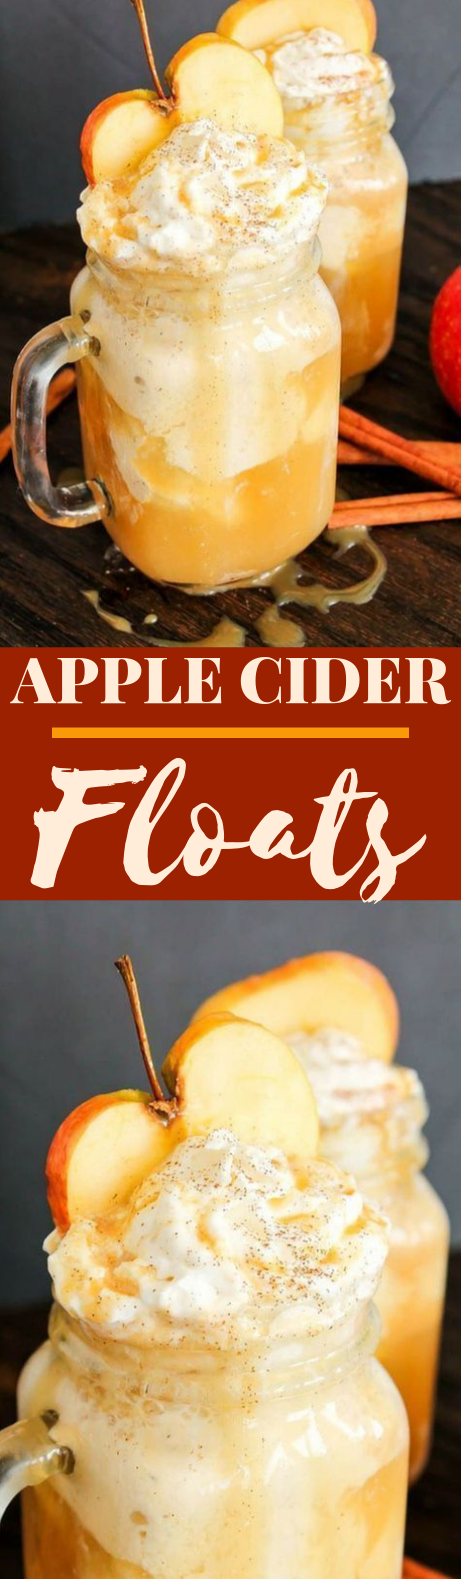 Apple Cider Floats #drinks #fall